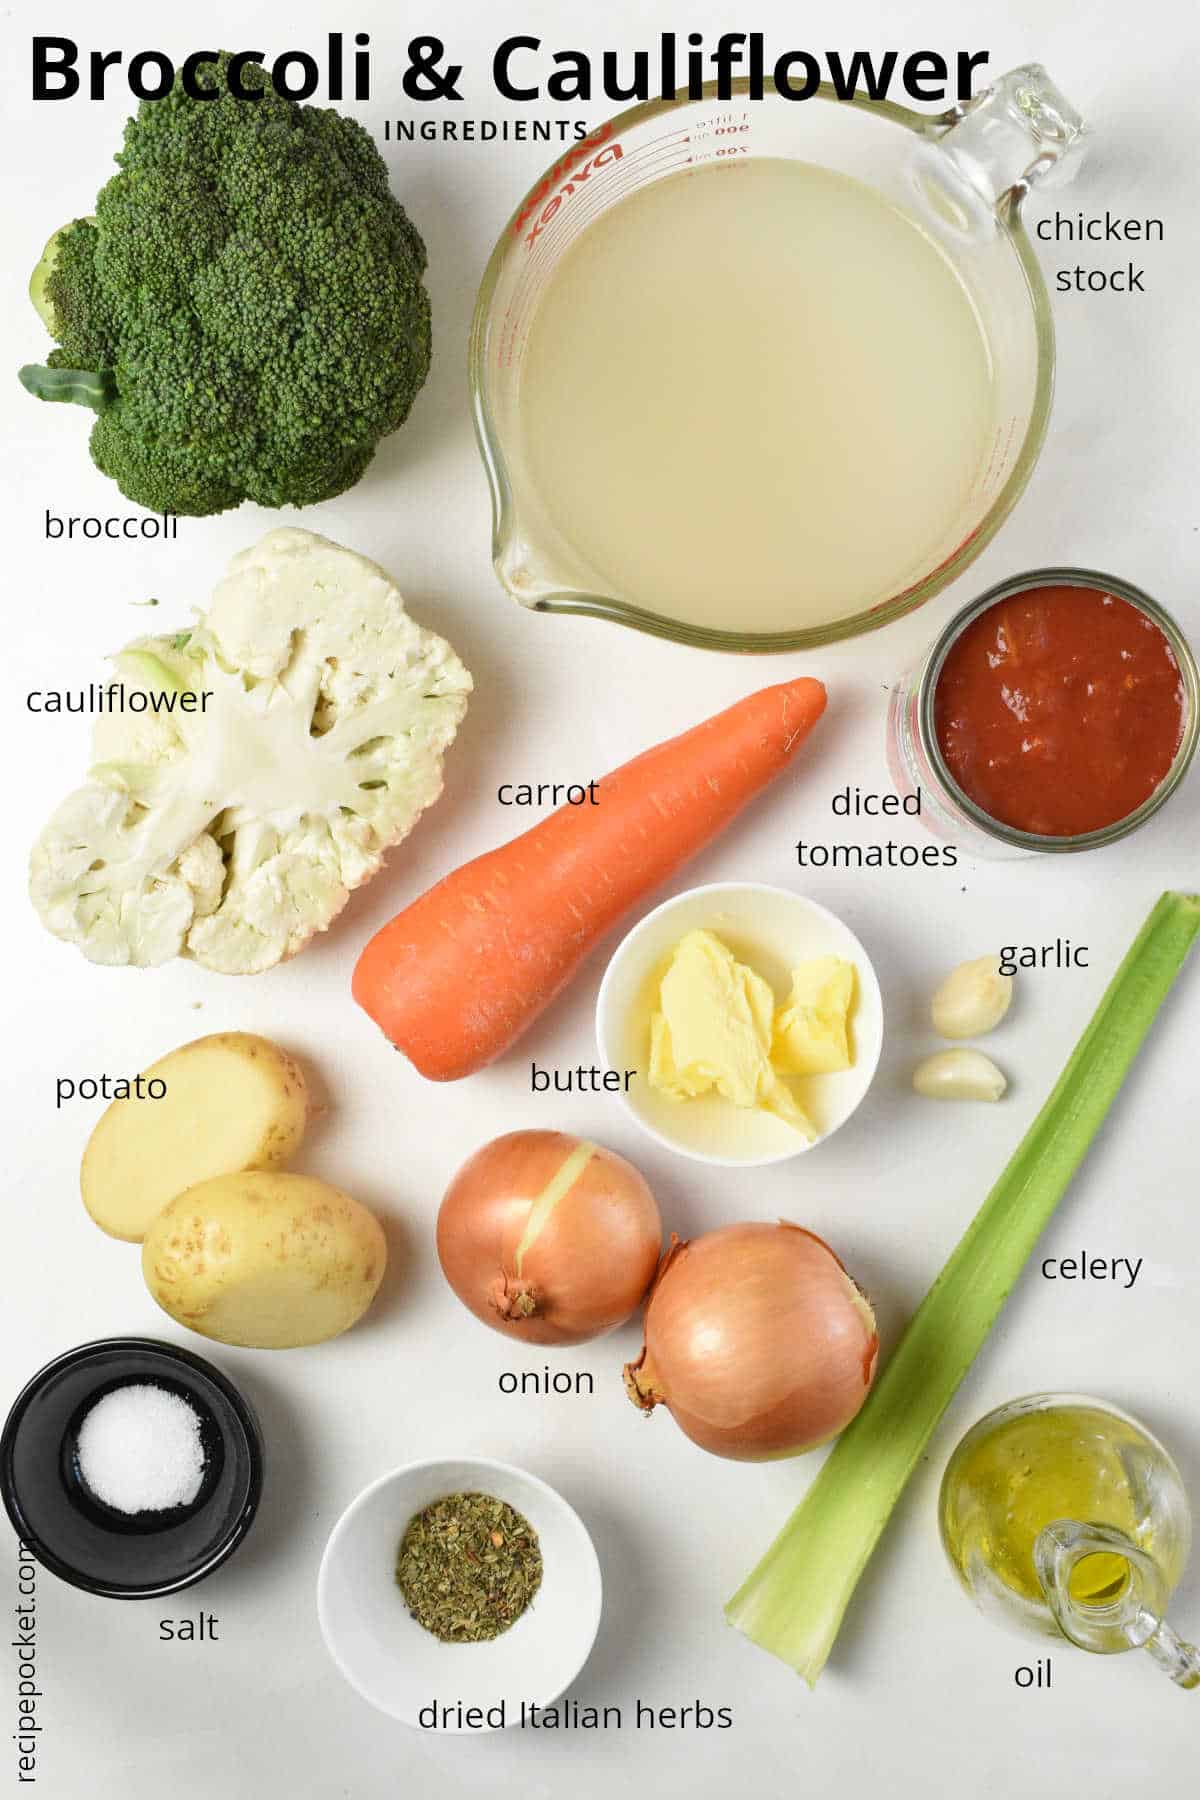 Ingredients needed to make broccoli cauliflower soup.